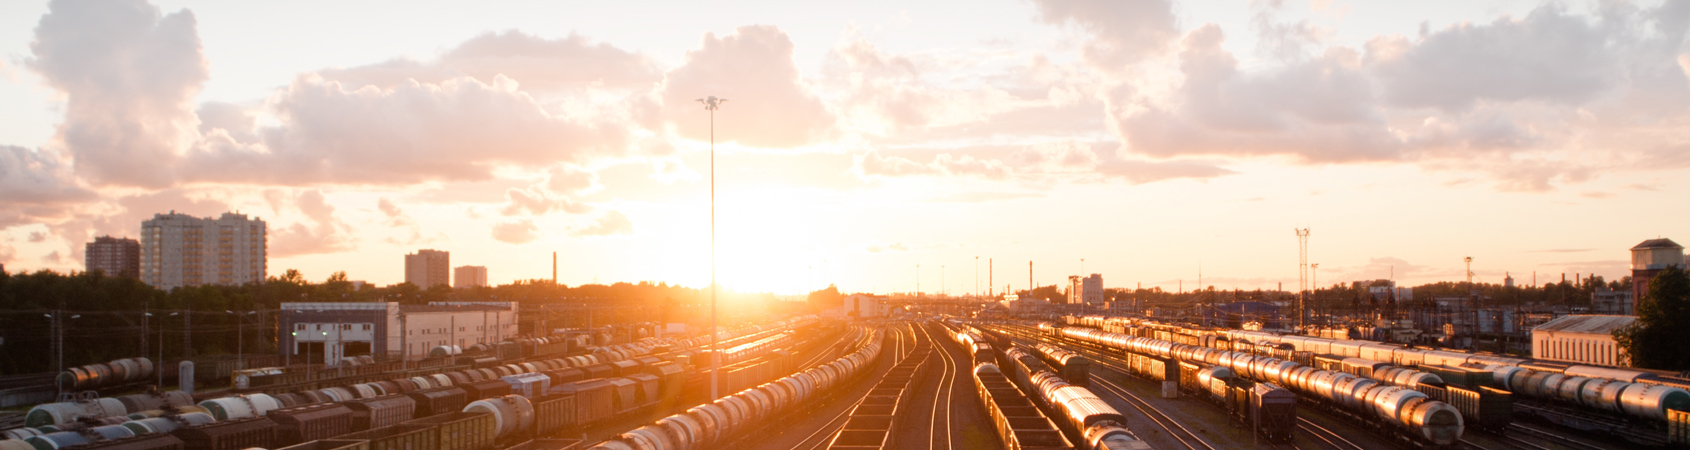 rail fleet transport europe track analyse optimise ubidata